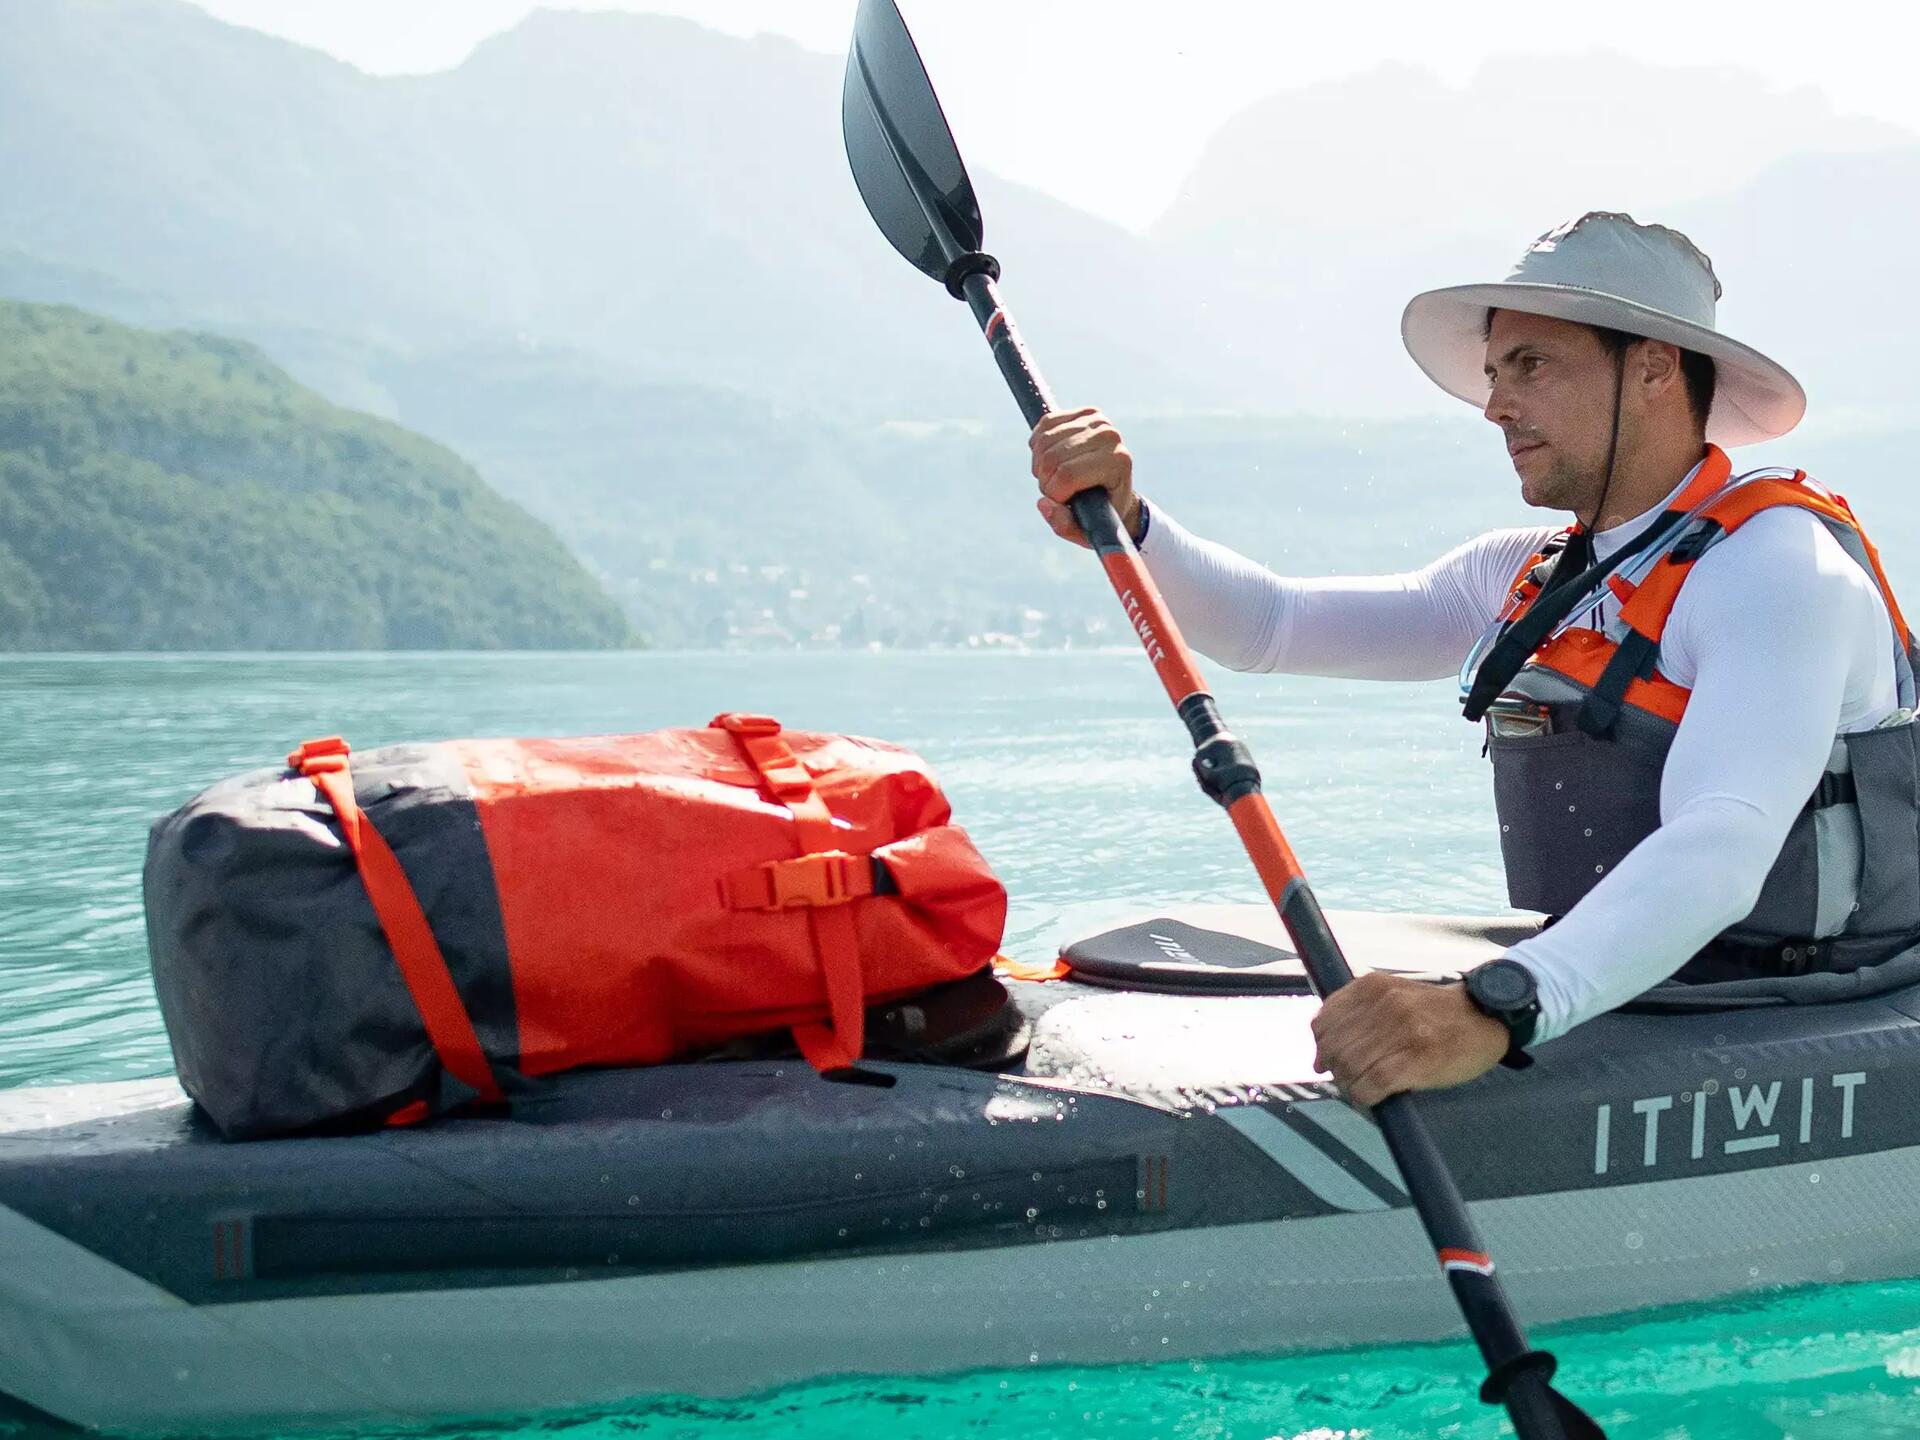 4 top kayaking spots in Hong Kong + Essential gear list!